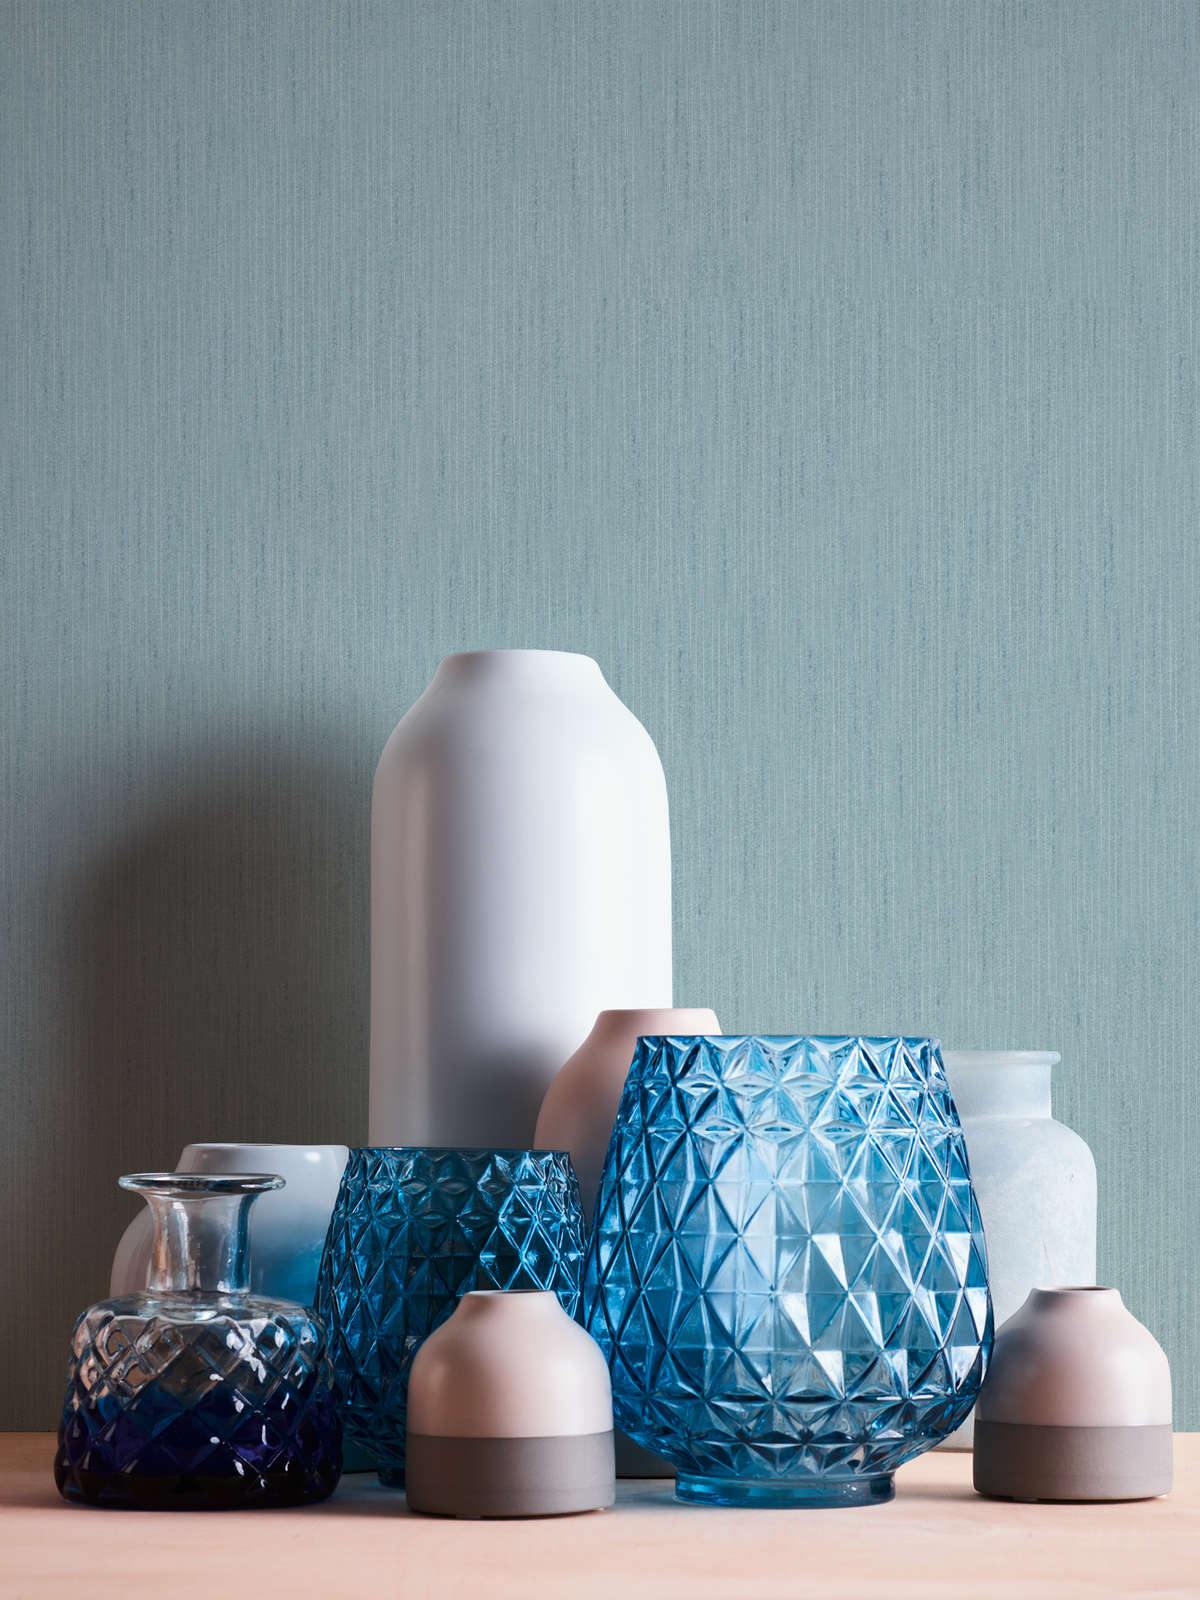             Wallpaper blue grey with texture effect & mottled colour & textile effect
        